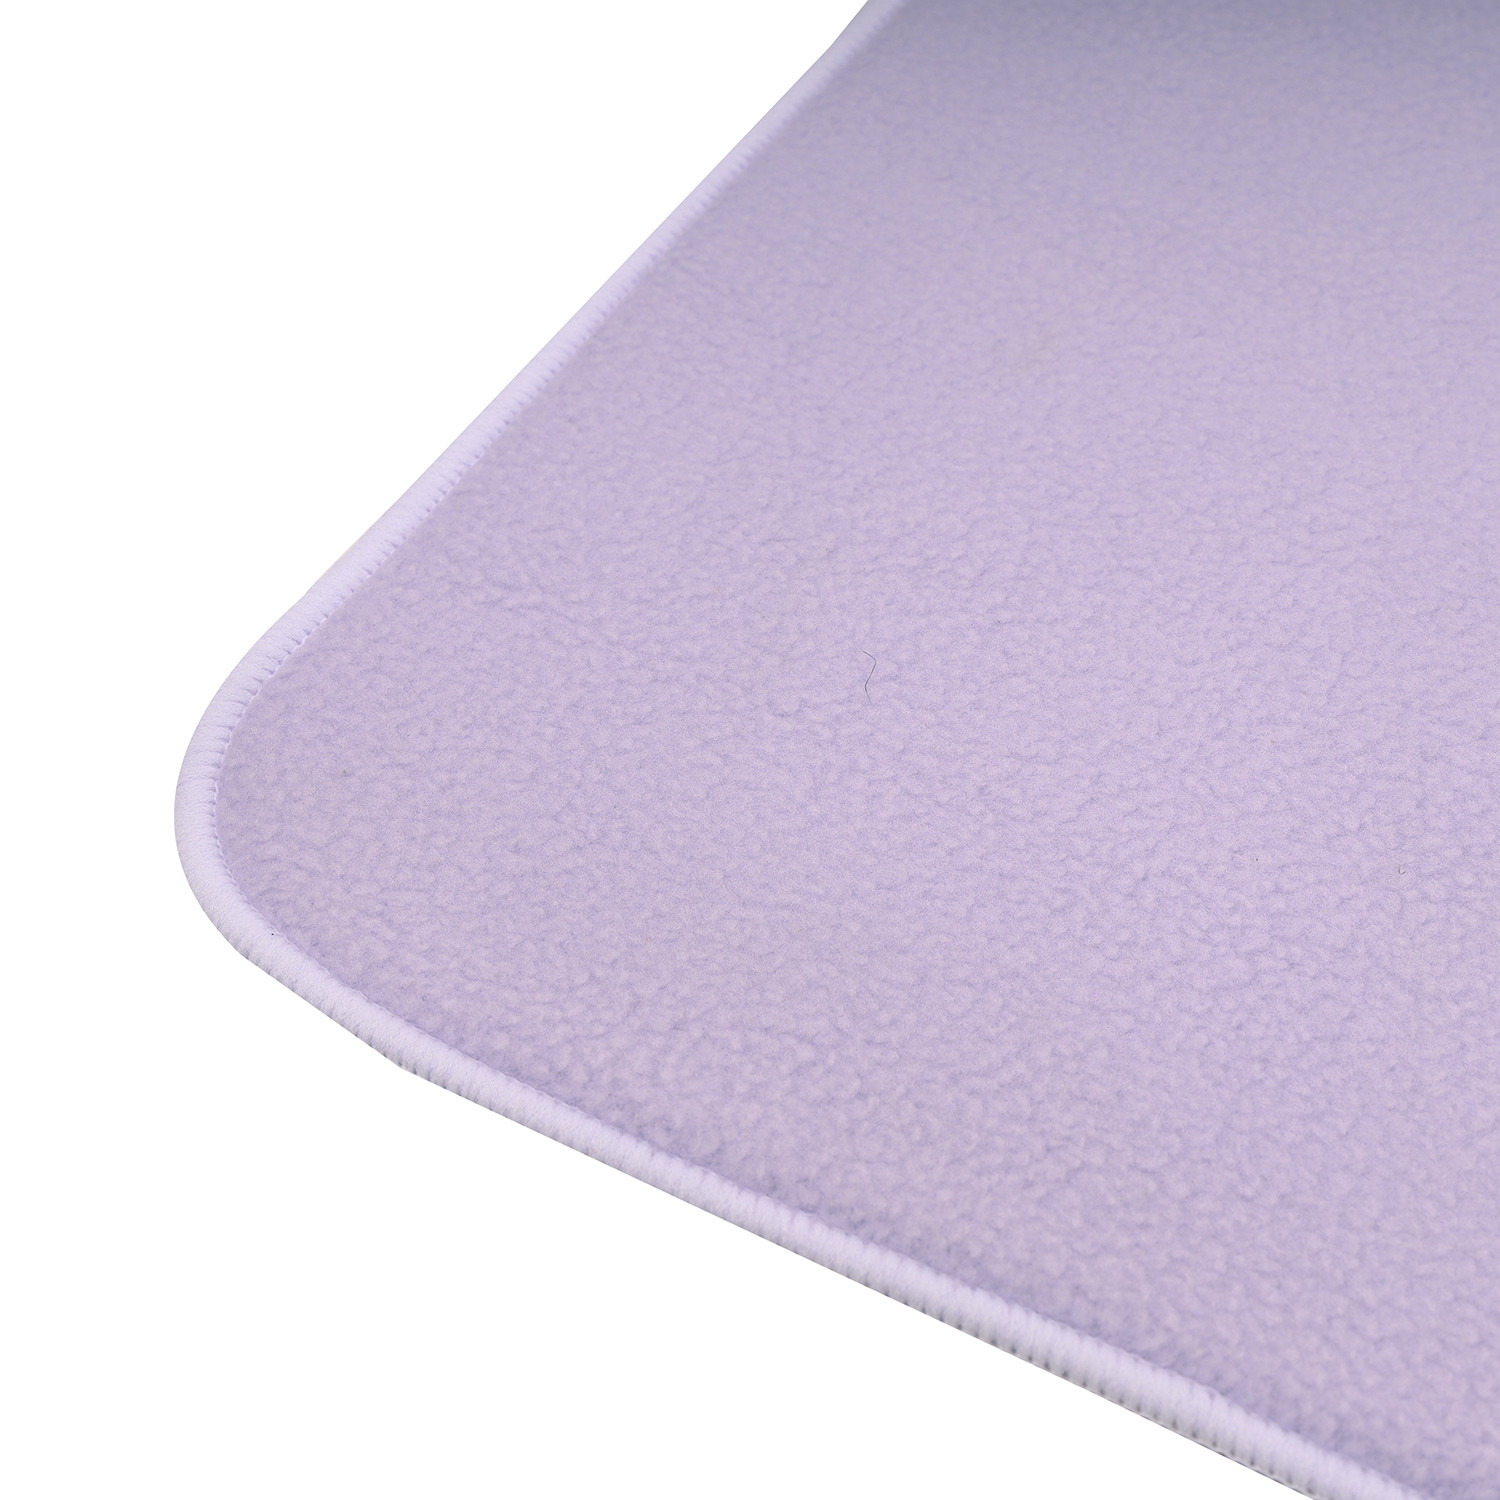 Kuber Industries Dish Dry Mat | Microfiber Drying Mat | Reversible Kitchen Drying Mat | Absorbent Mat | Kitchen Dish Dry Mat | 38x50 | Pack of 2 | Light & Dark Purple